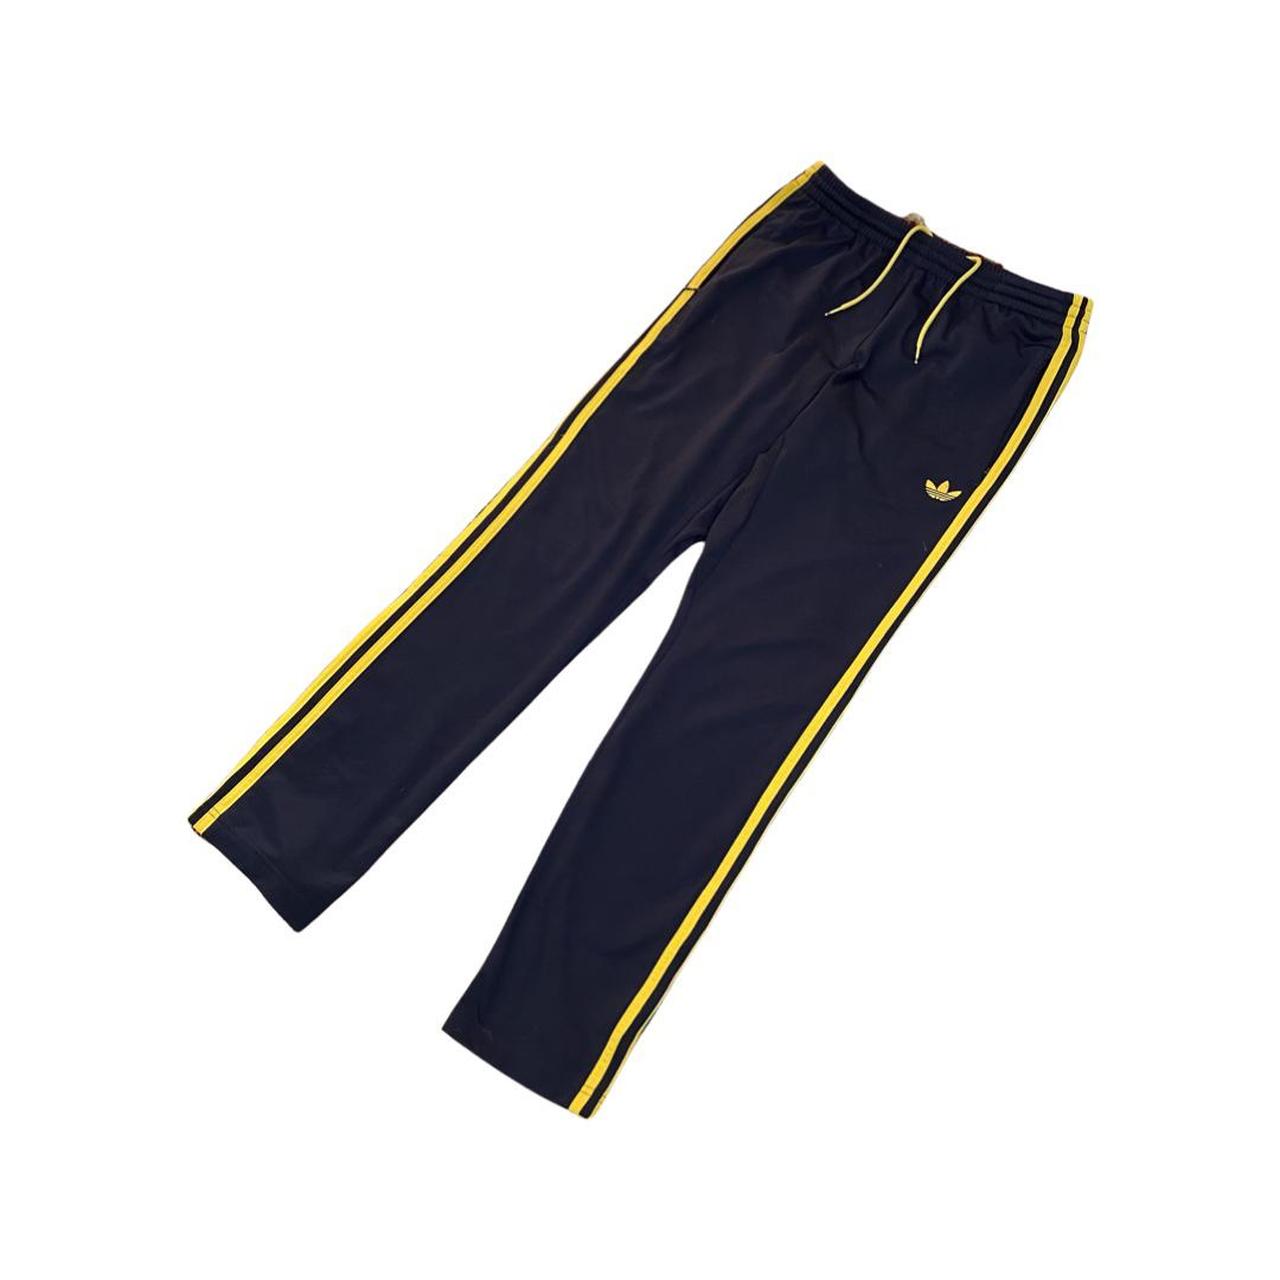 Adidas track pants - size medium - mens black yellow... - Depop